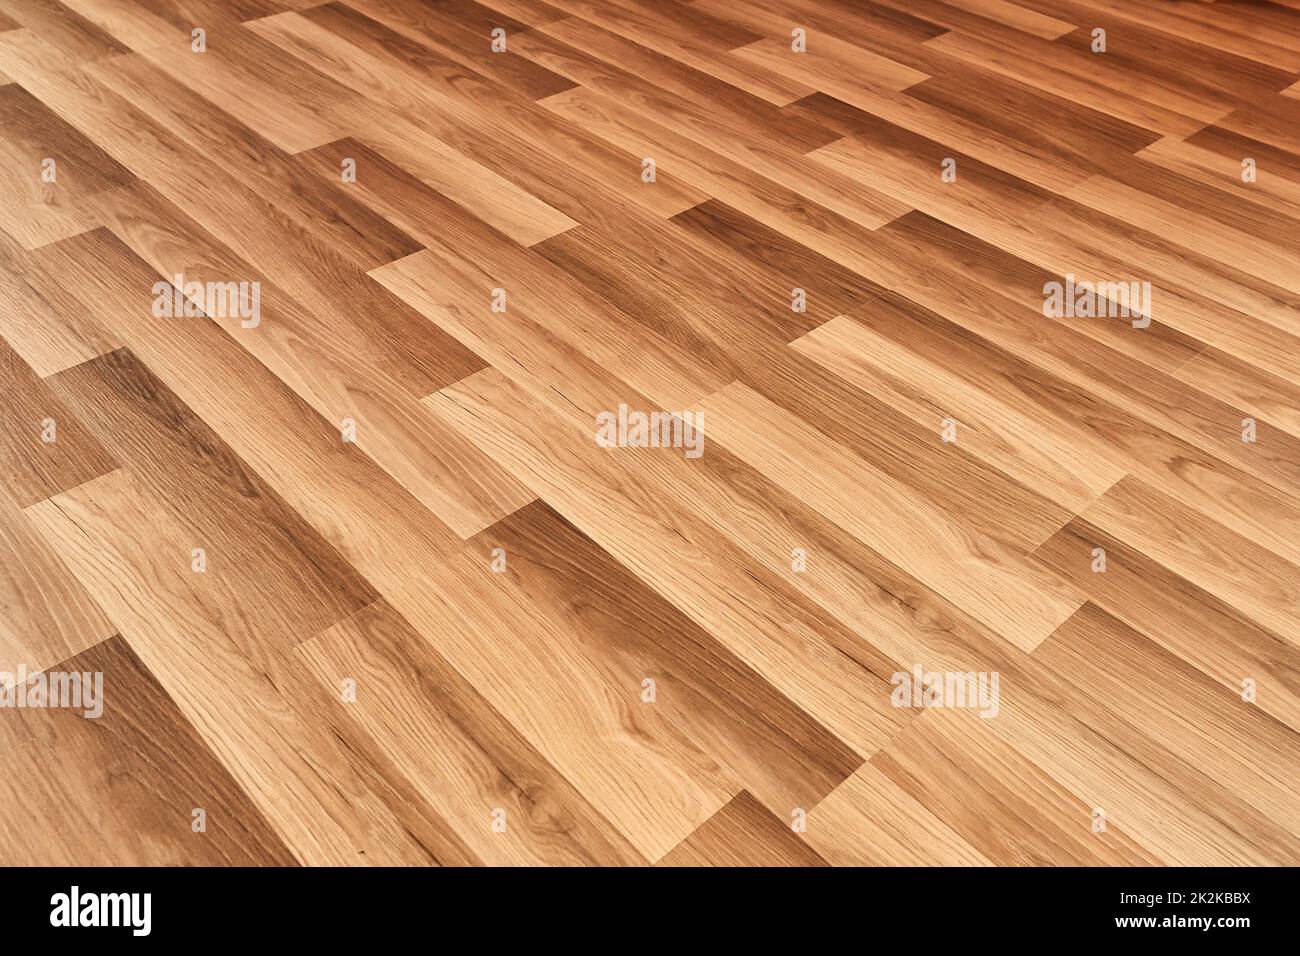 Parquet floor of a room Stock Photo